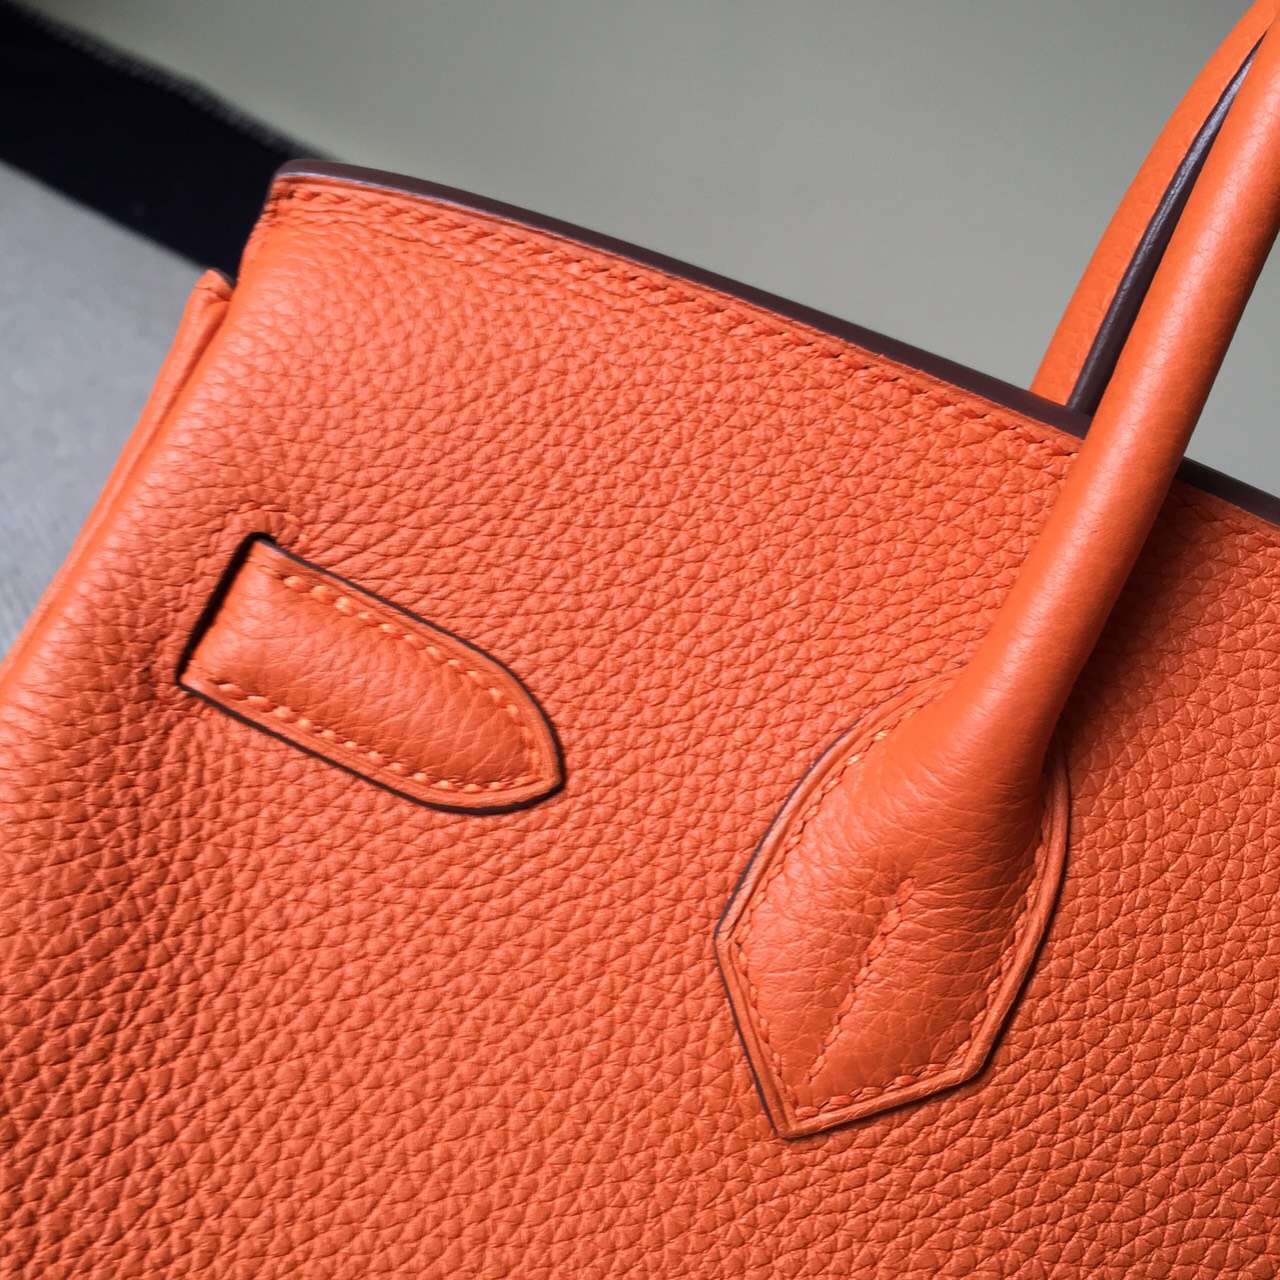 On Sale Hermes Togo Leather Birkin Bag30cm in Classic Orange